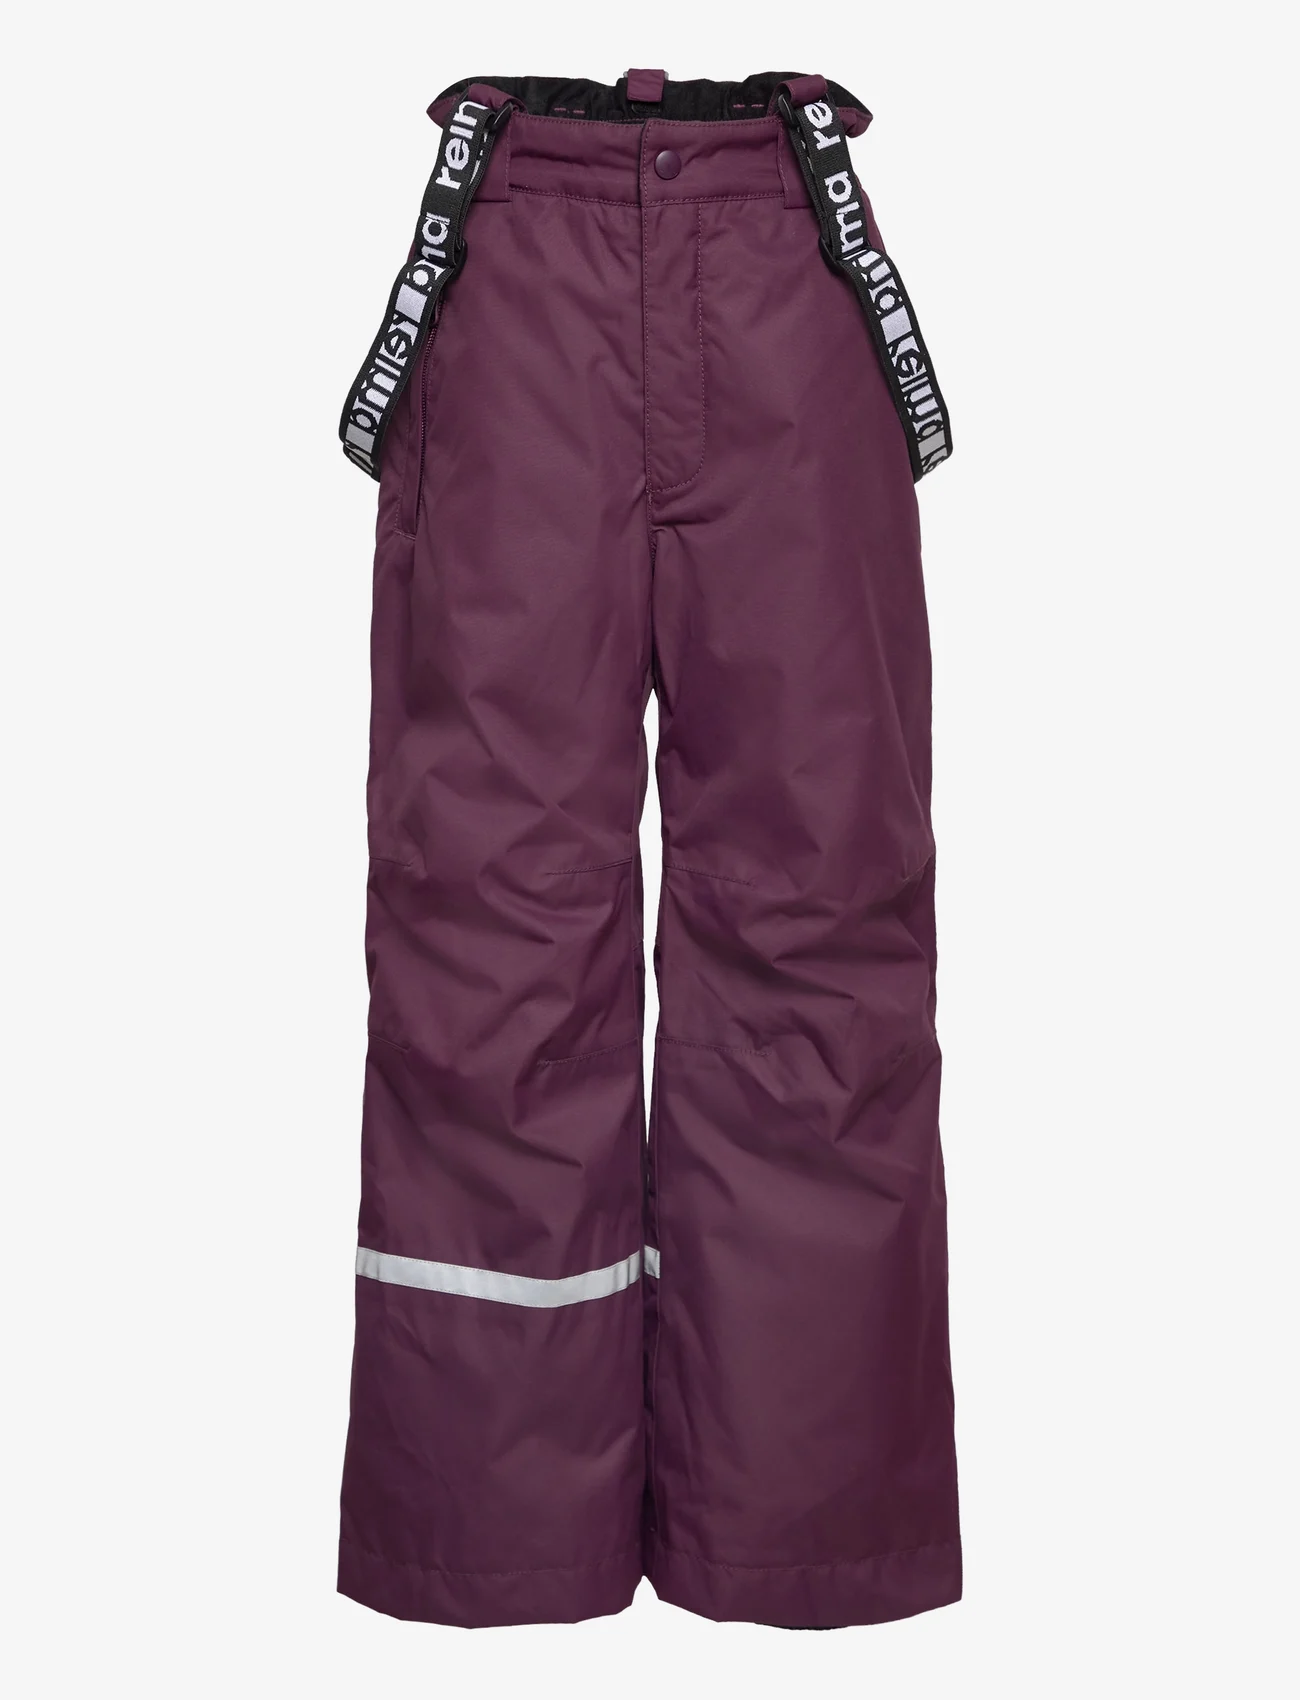 Reima - Winter pants, Tuokio - friluftsbukser - deep purple - 0